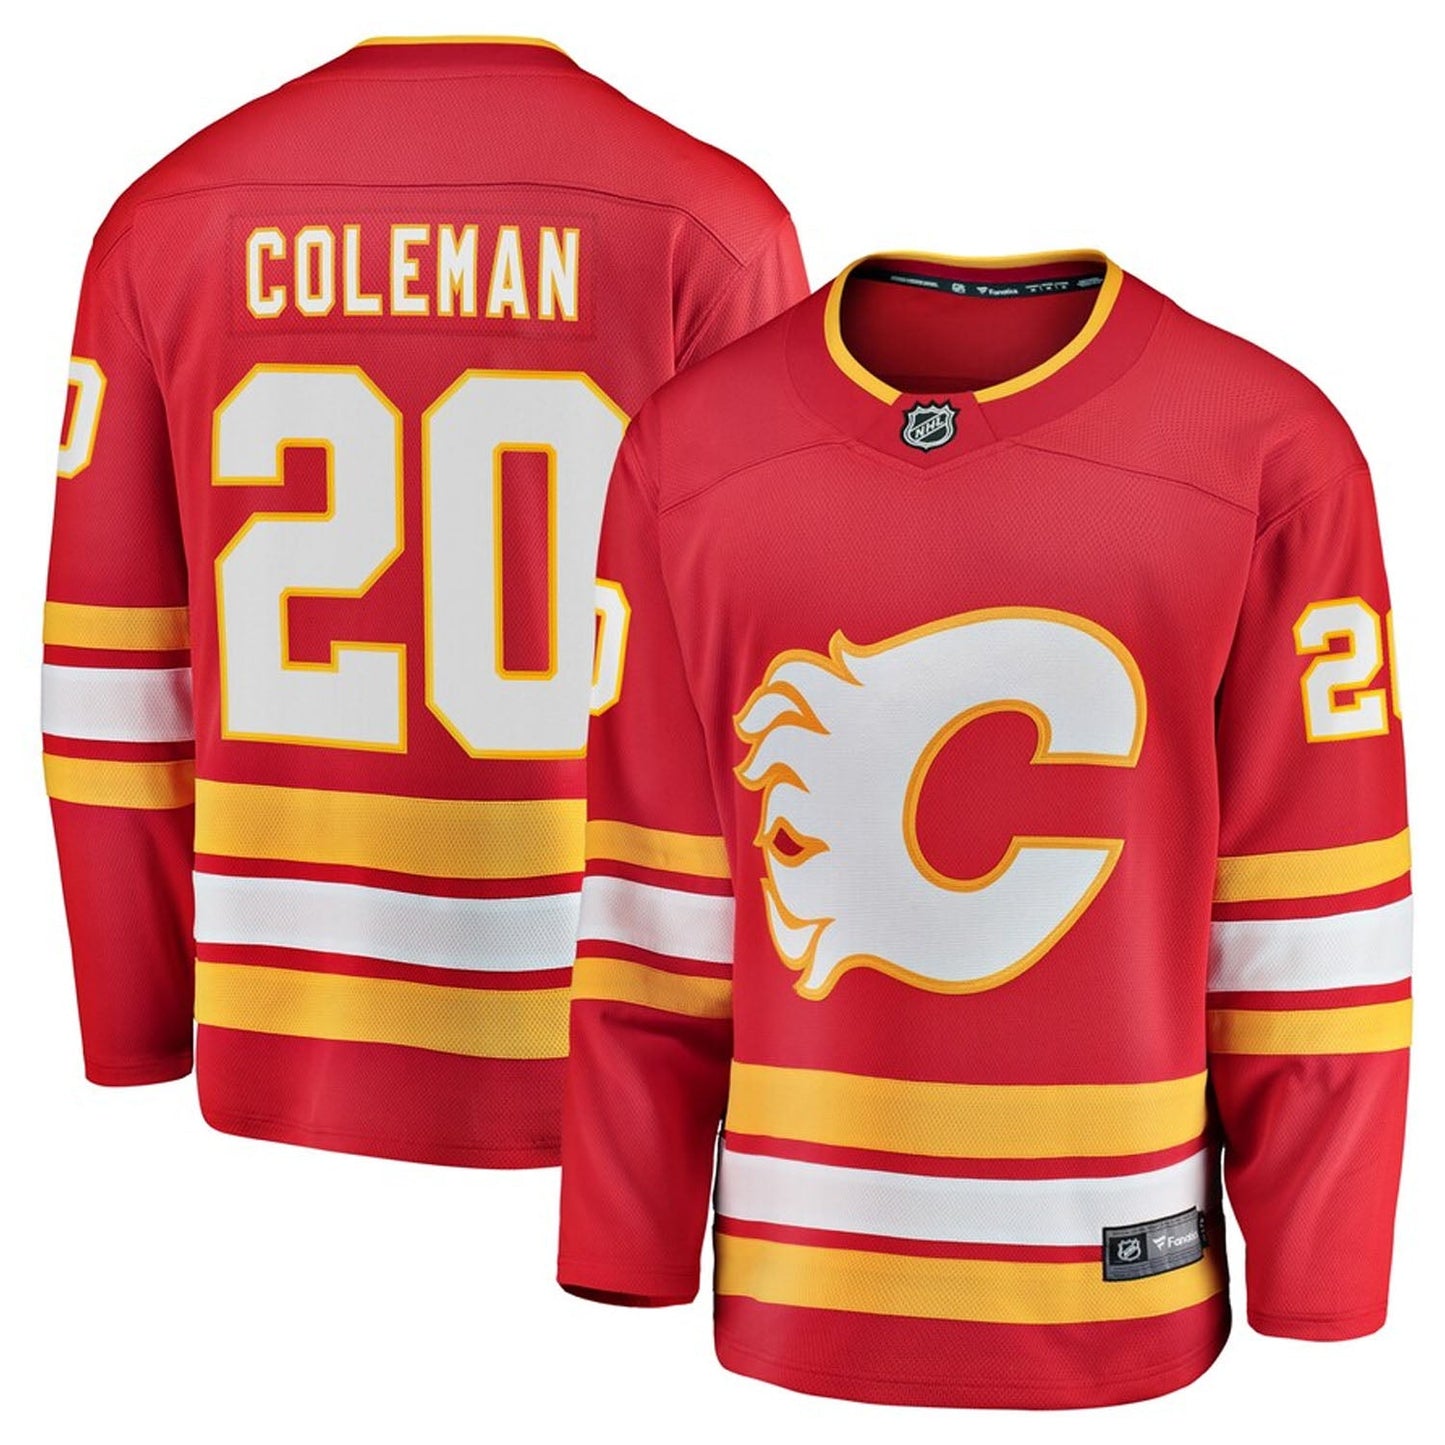 NHL Blake Coleman Calgary Flames 20 Jersey